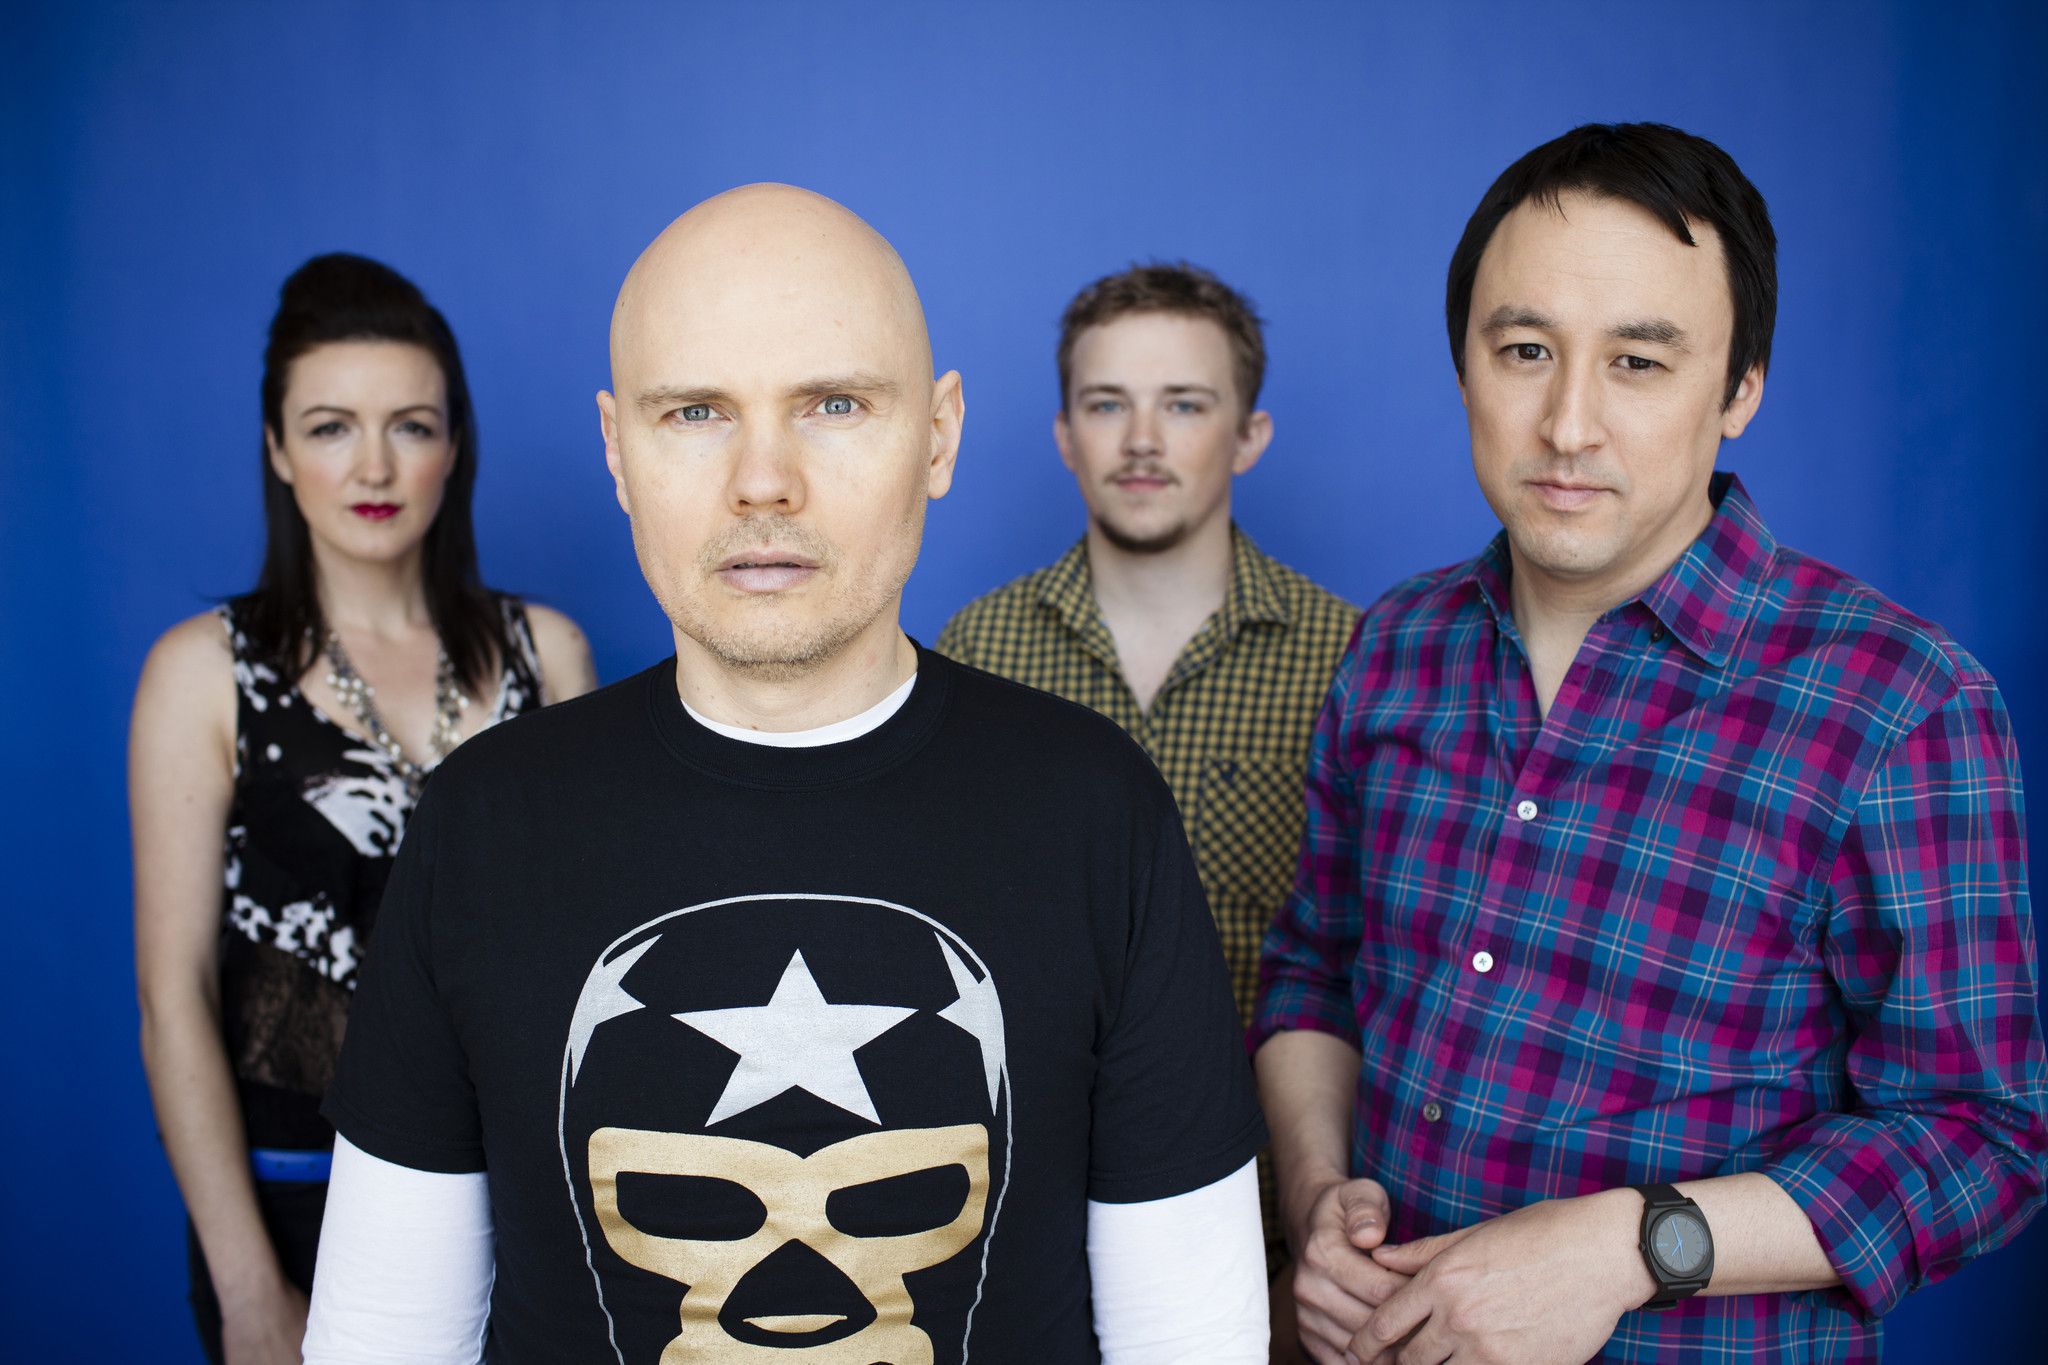 Billy Corgan, Smashing Pumpkins offer solid night of rock 'n' roll